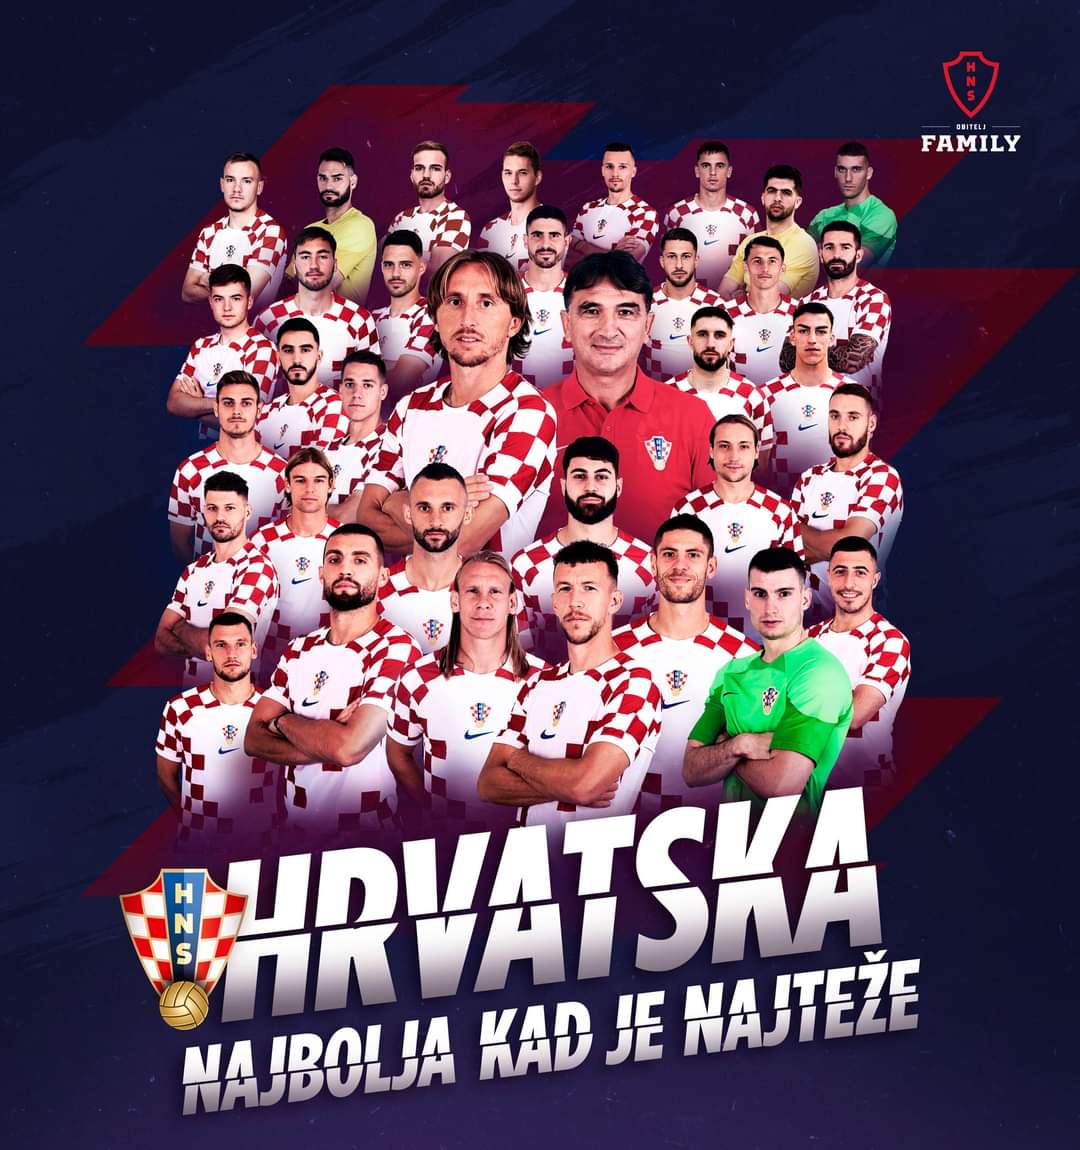 The Croatian national football team qualified for EURO 2024! ❤️🏆🎉
CONGRATULATIONS!!!

📸 FB Hrvatski nogometni savez 

#IznadSvihHrvatska